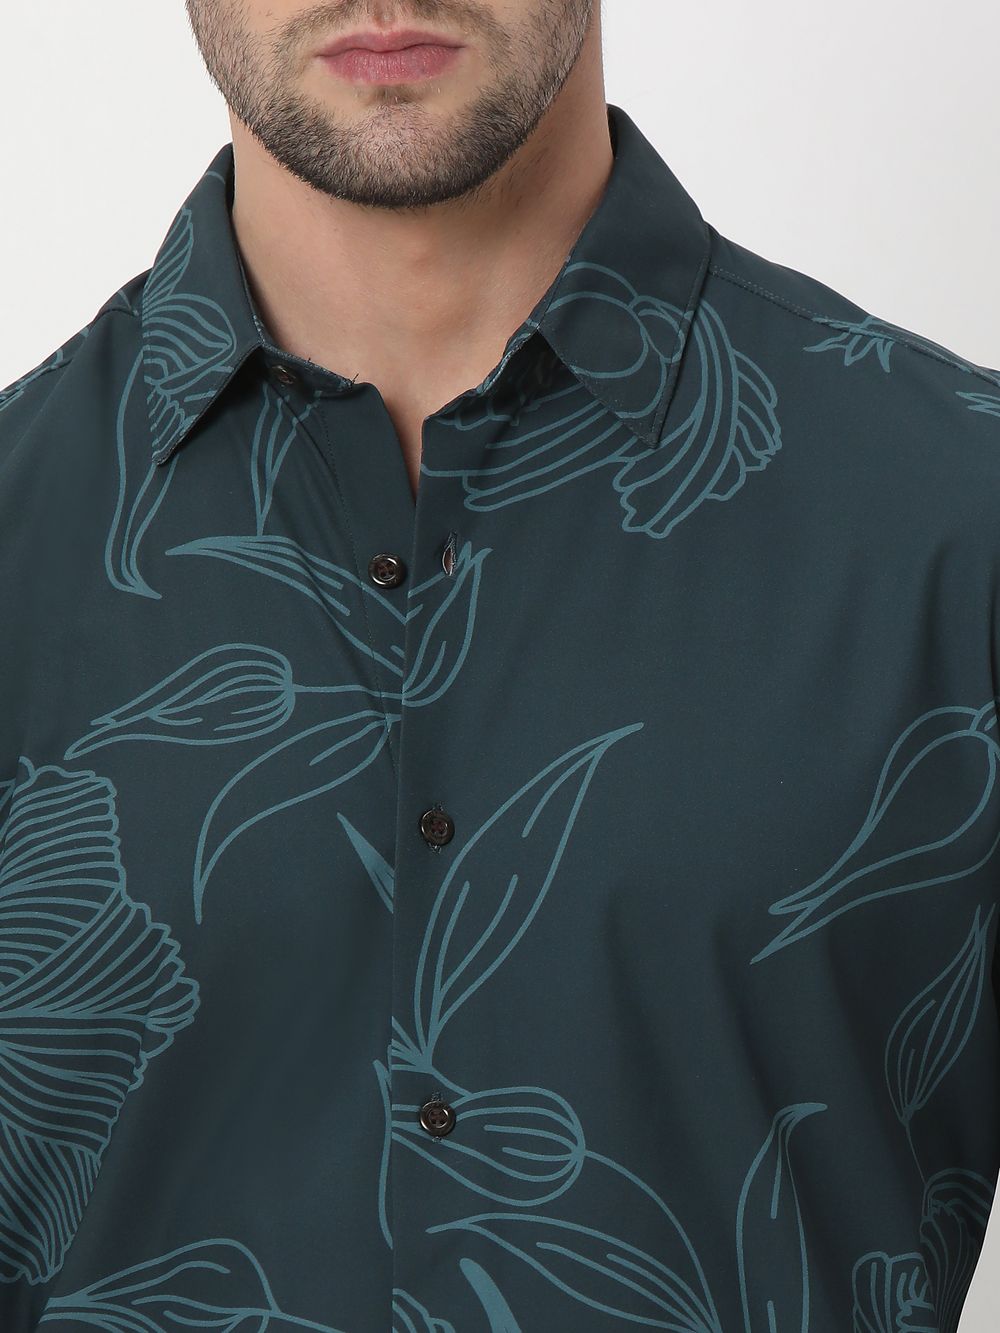 Green Floral Print Shirt